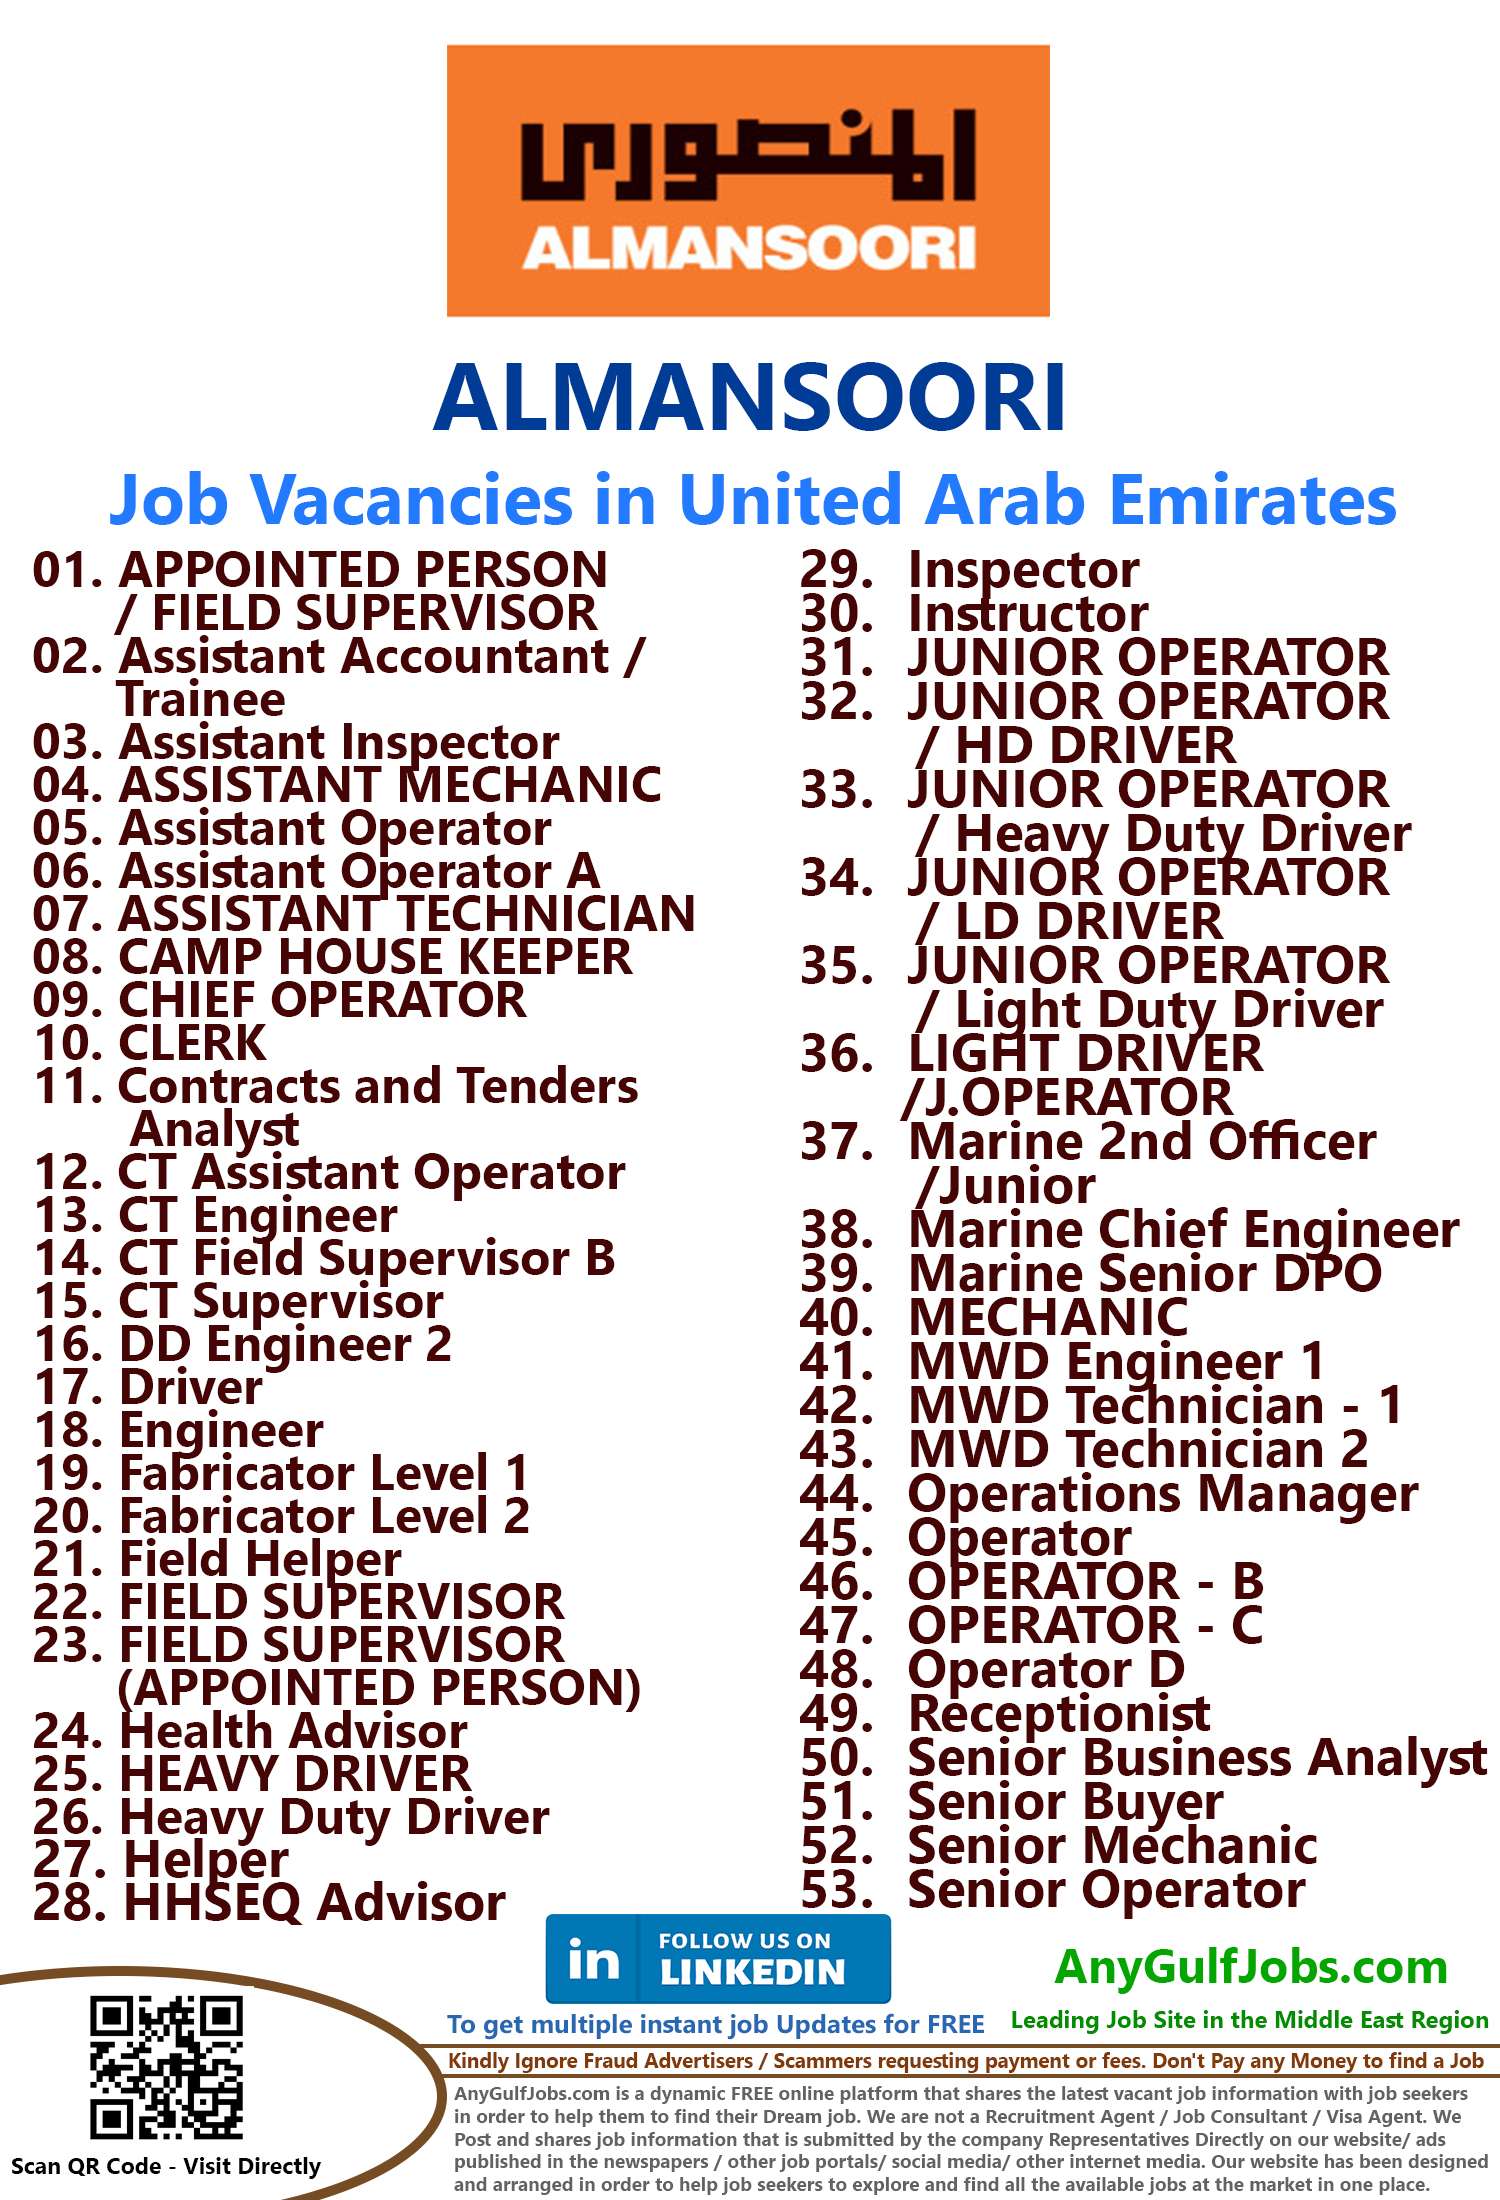 List of ALMANSOORI Jobs - United Arab Emirates